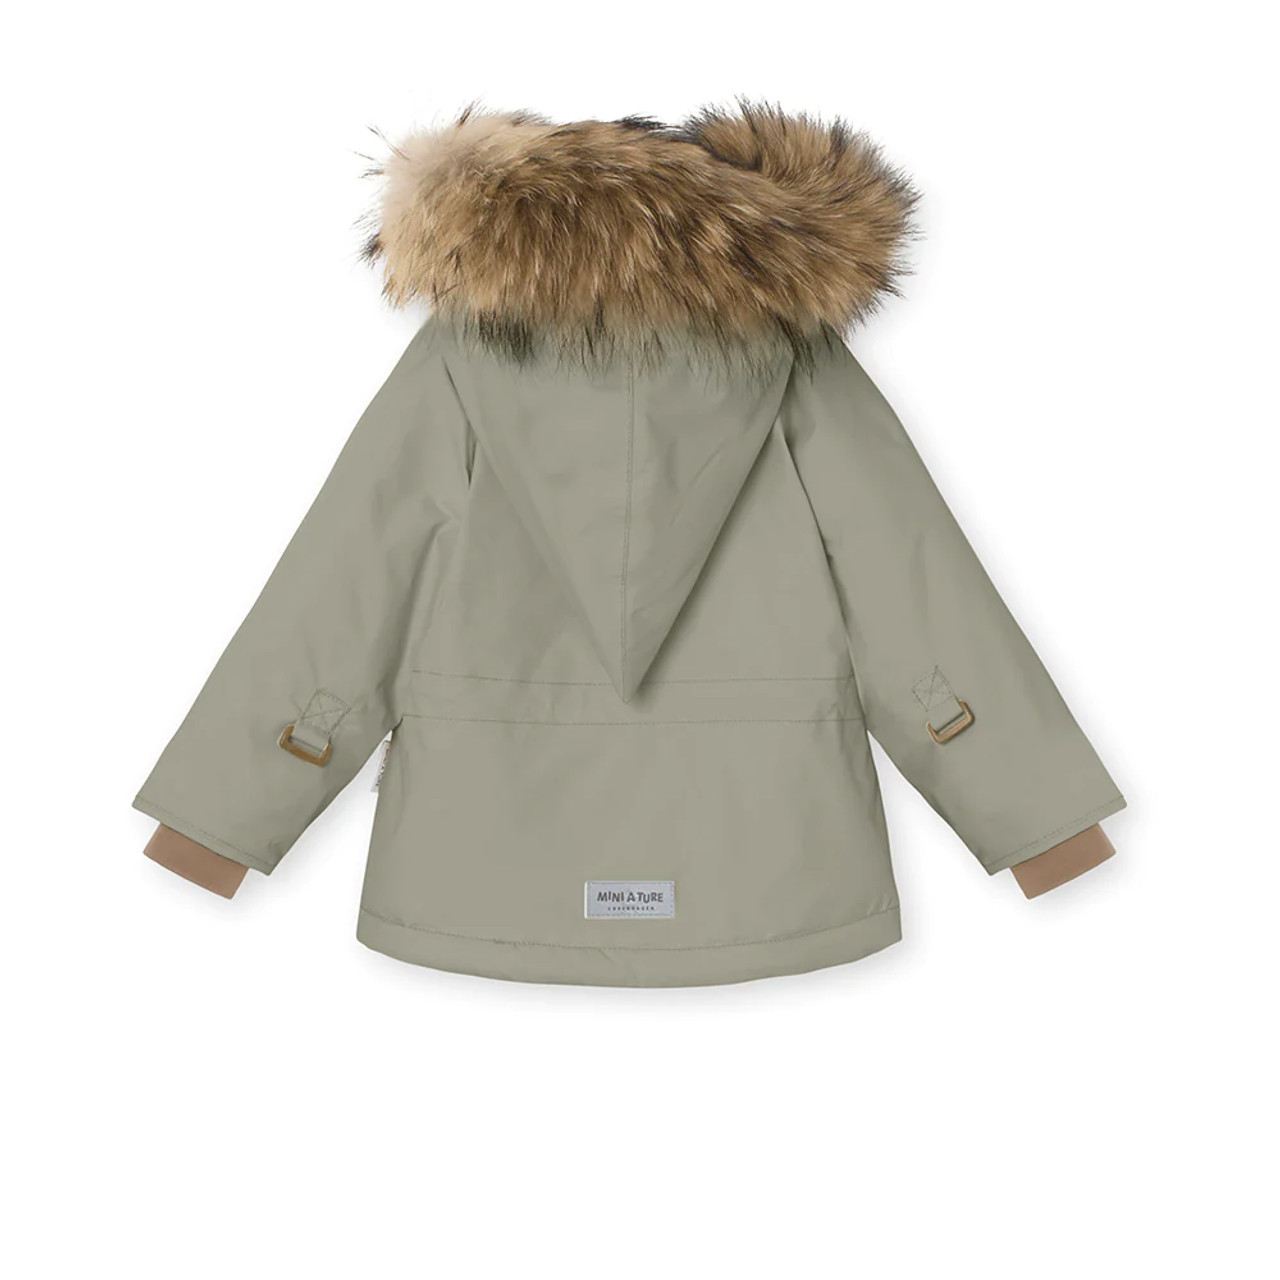 Mini A Ture Vestyn Winter Jacket Col. Block. Grs - 107.22 €. Buy